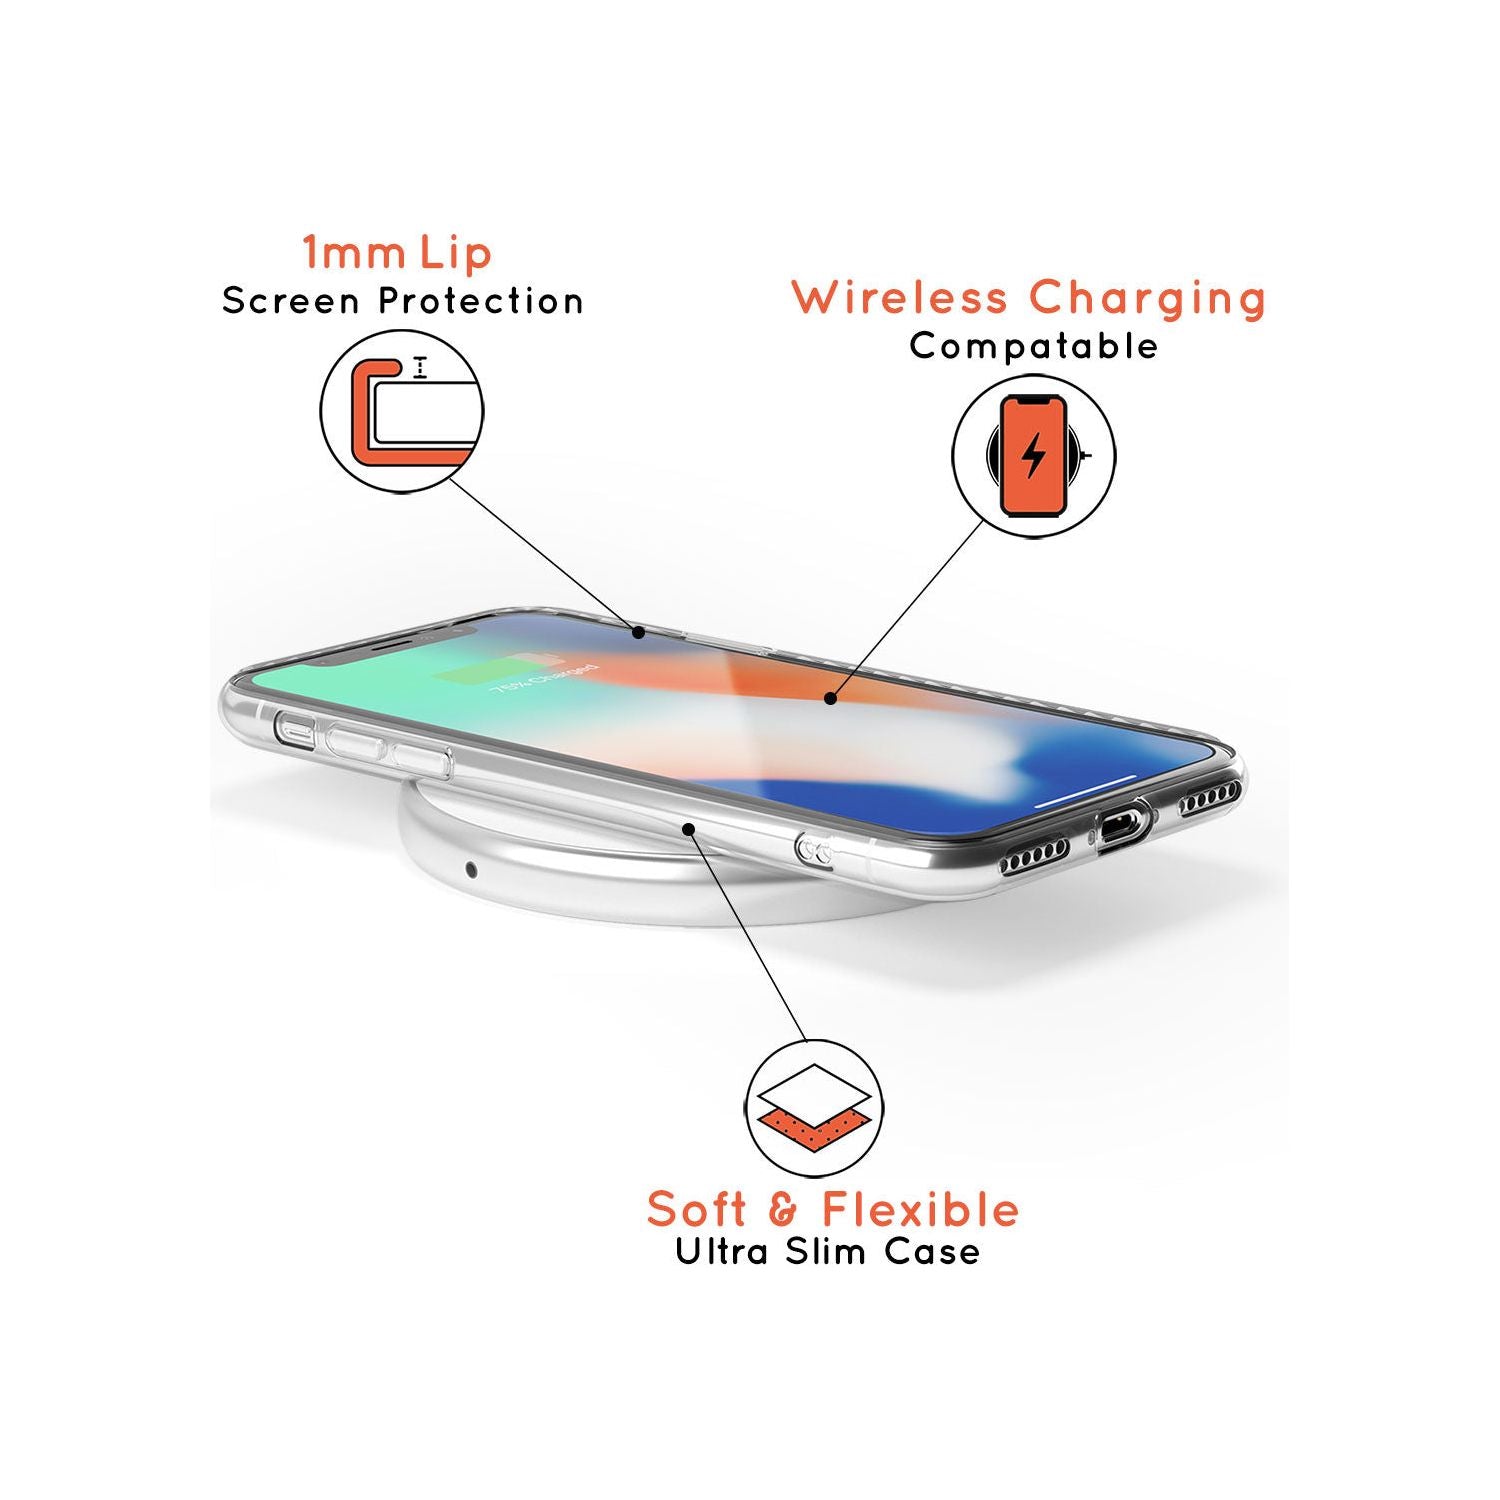 Large White Mandala Transparent Design Black Impact Phone Case for iPhone 11